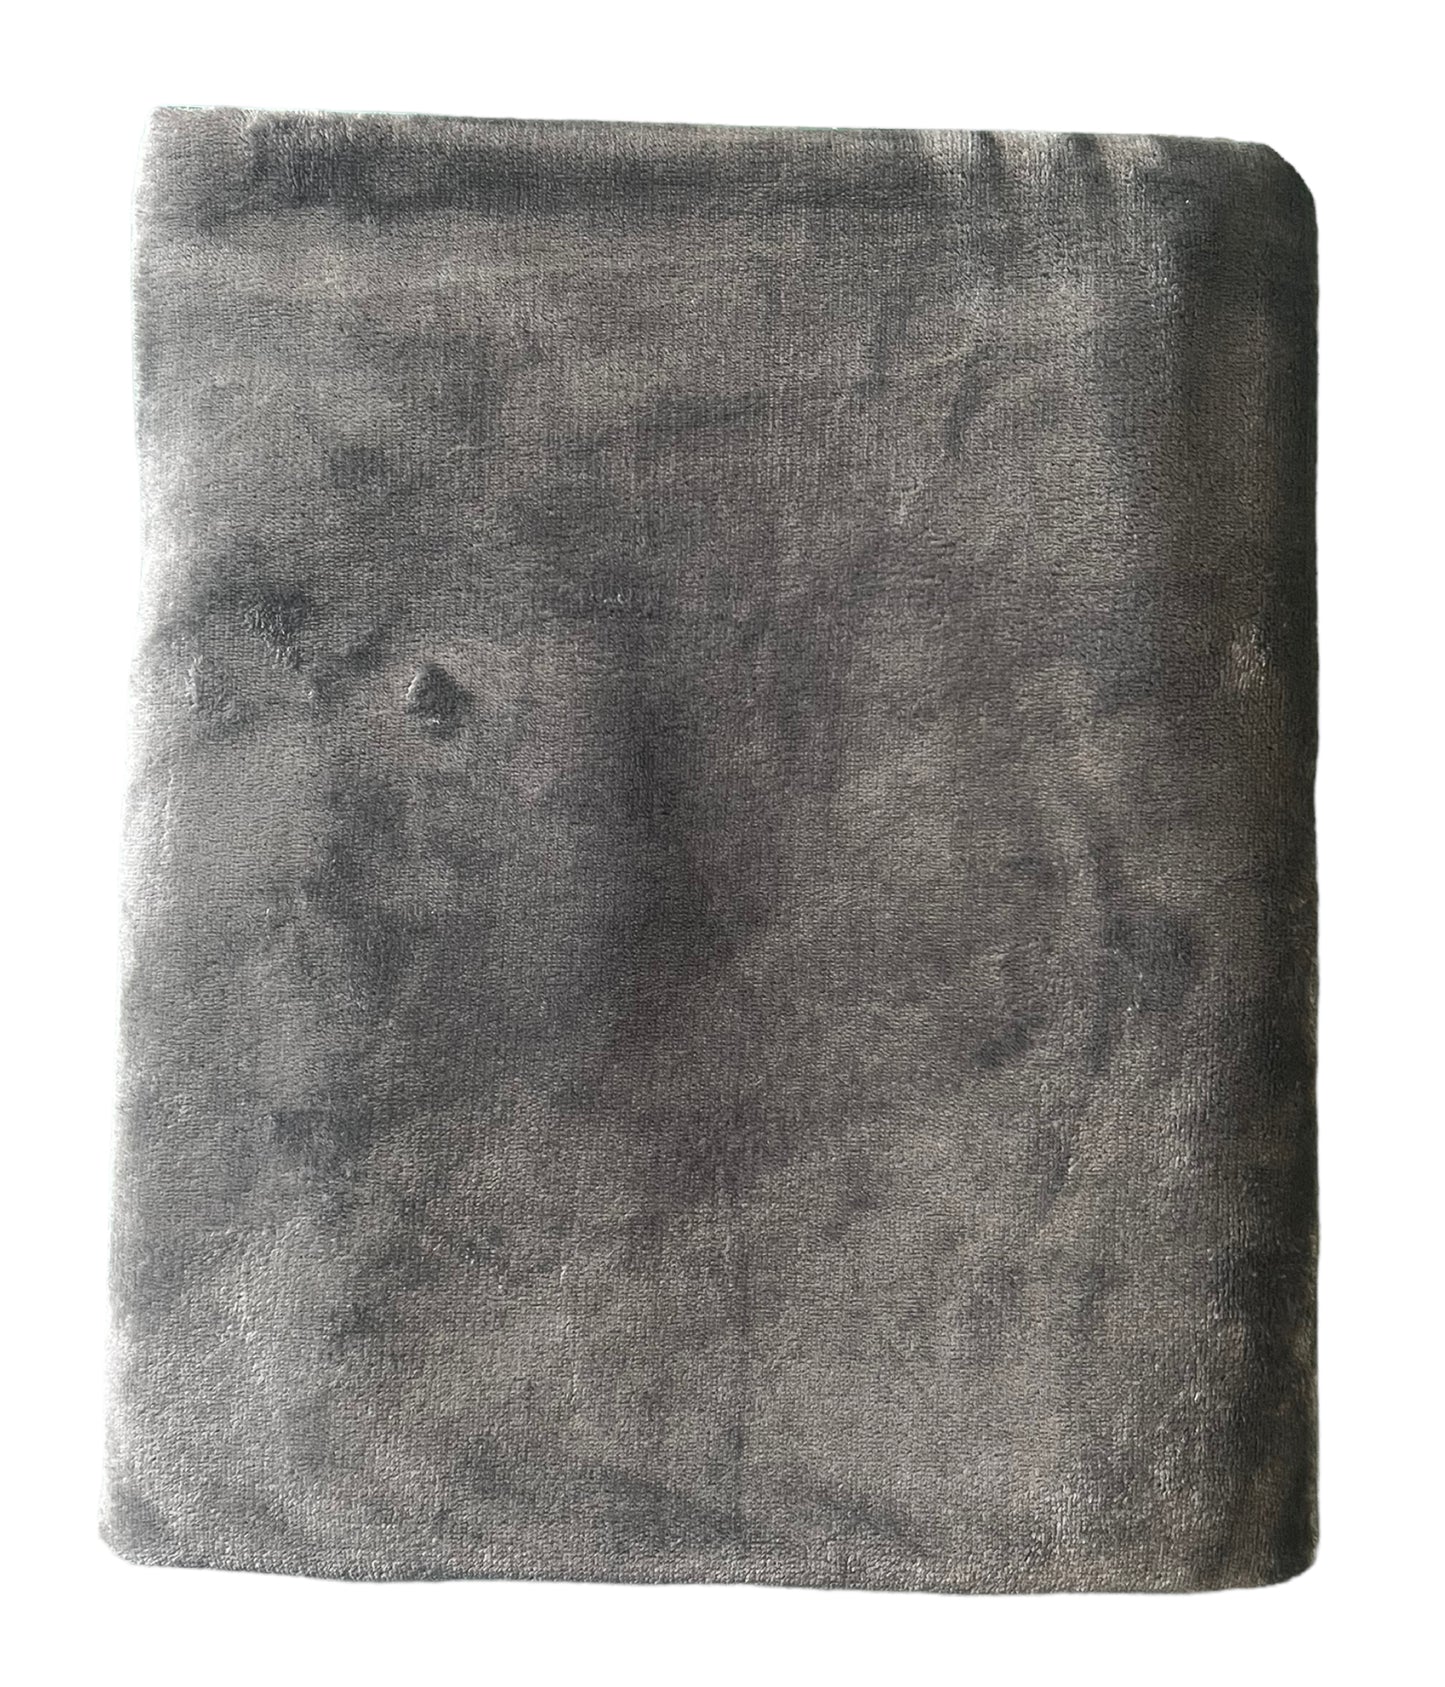 Minky Blanket - Grey Minky Fleece Backing #1